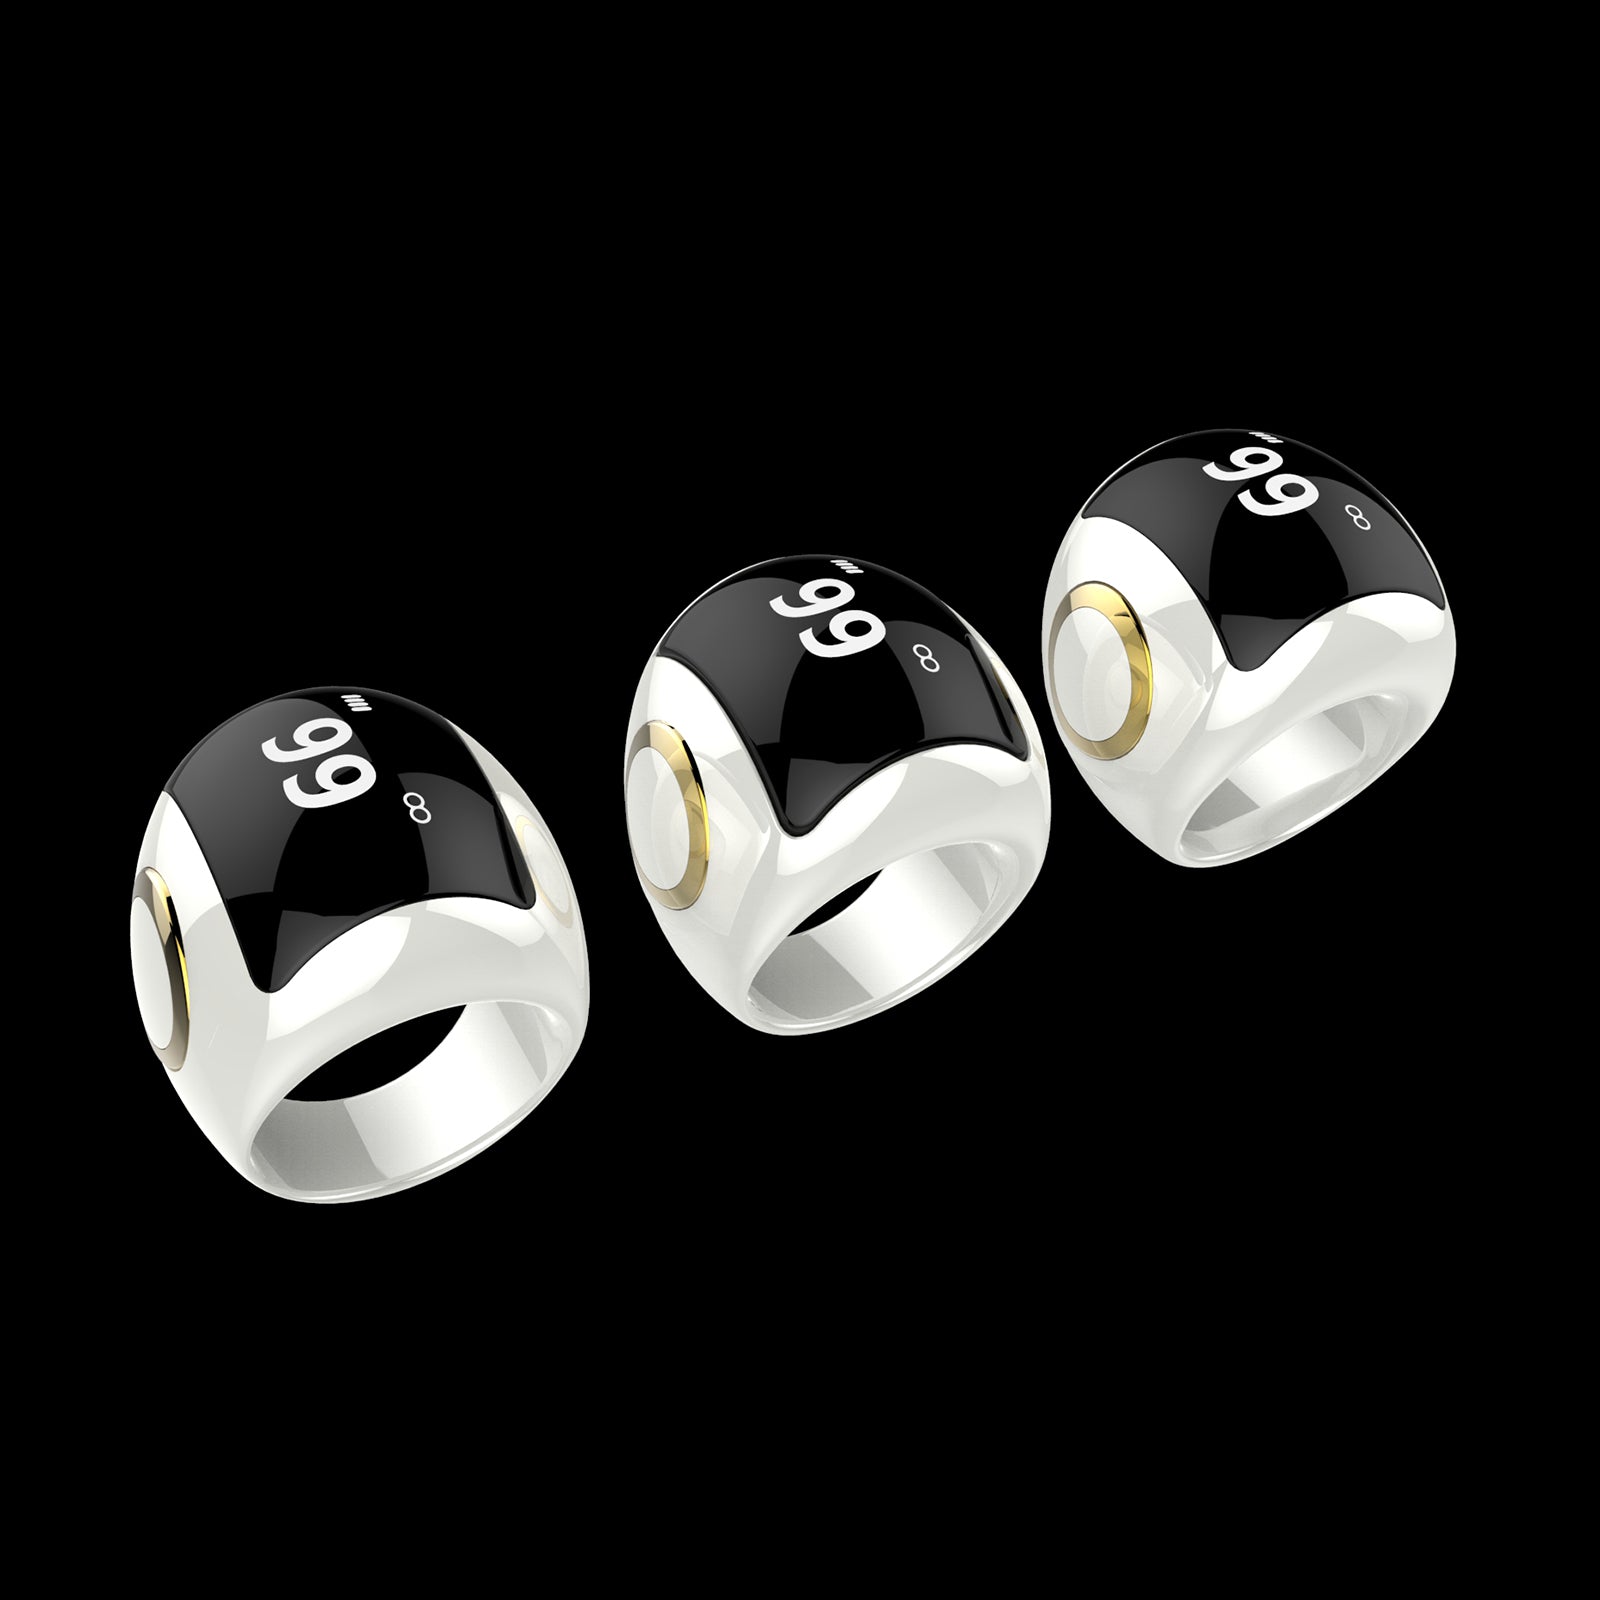 Equantu-World's First Luxury Ceramic Tasbih Smart Ring QB709